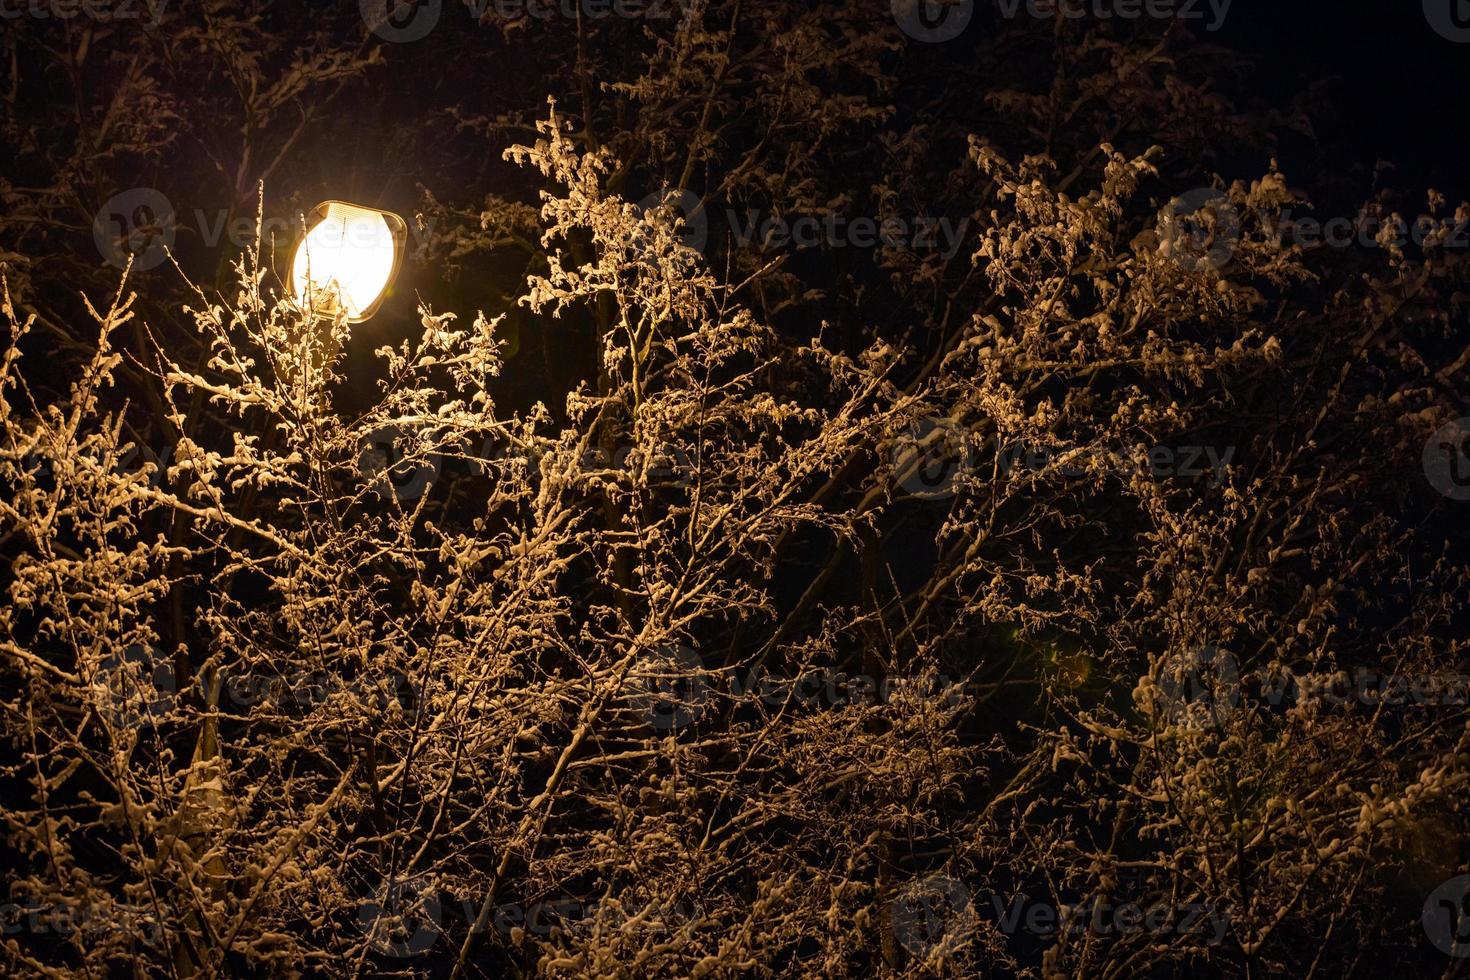 sneeuw gedekt winter takken met straat lamp binnen Bij winter nacht foto